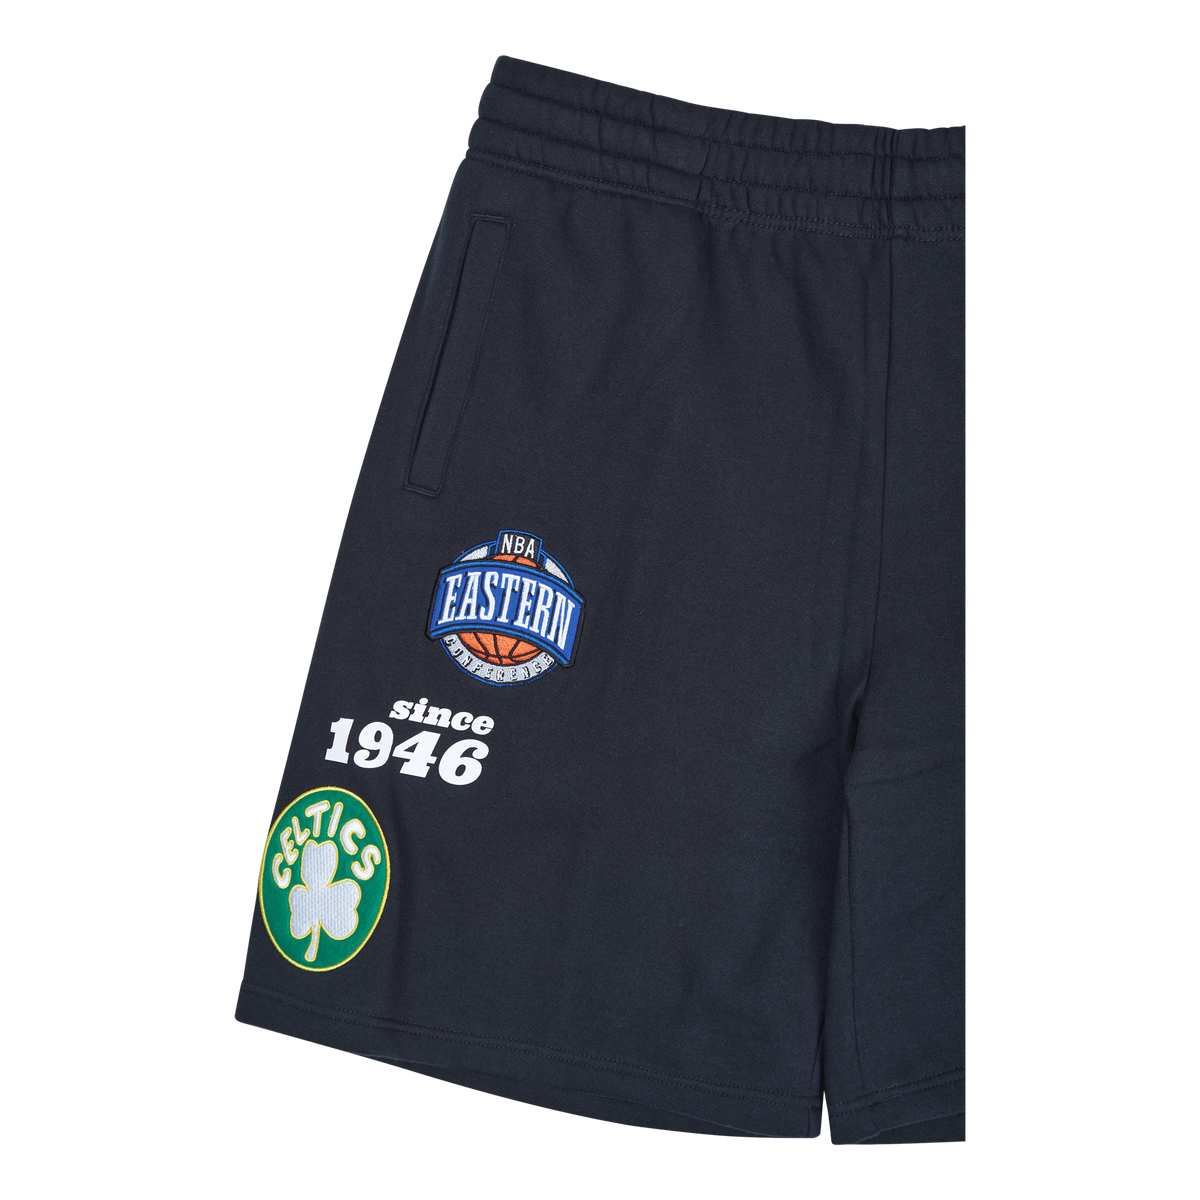 Celtics Team Origins Shorts